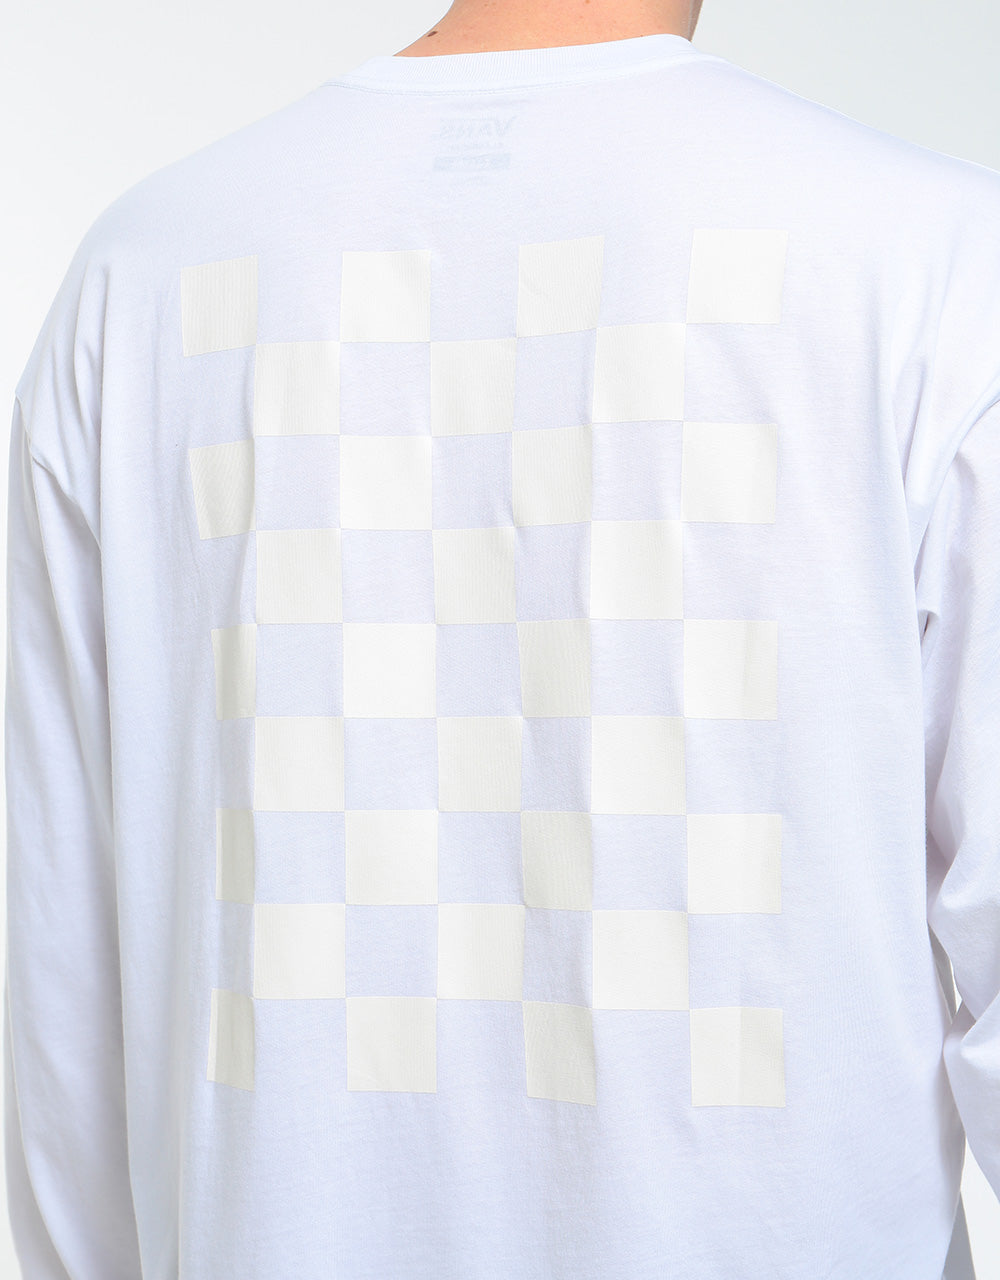 Vans Checkerboard 21 L/S T-Shirt - White